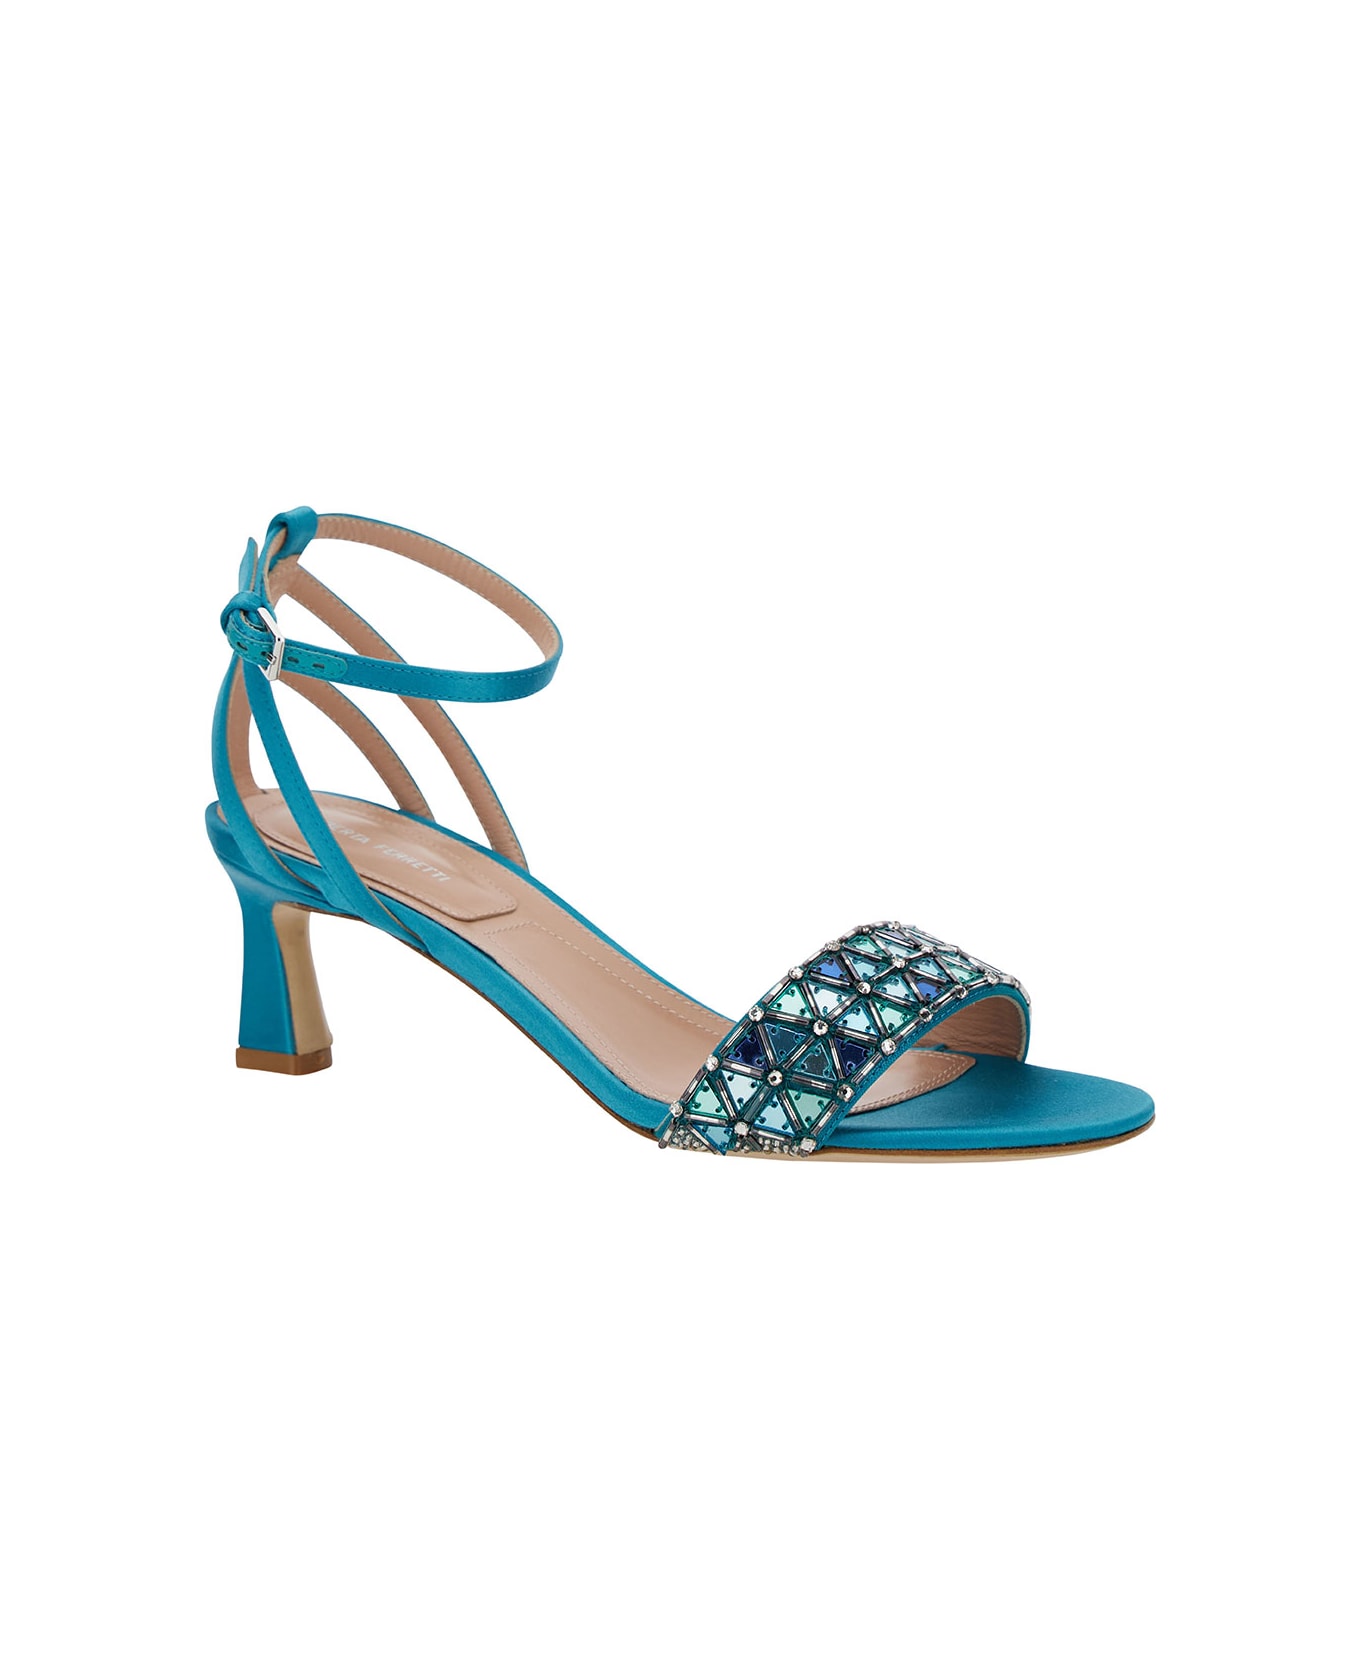 Alberta Ferretti Light Blue Sandals With Mirror-like Details In Leather Woman - Light blue